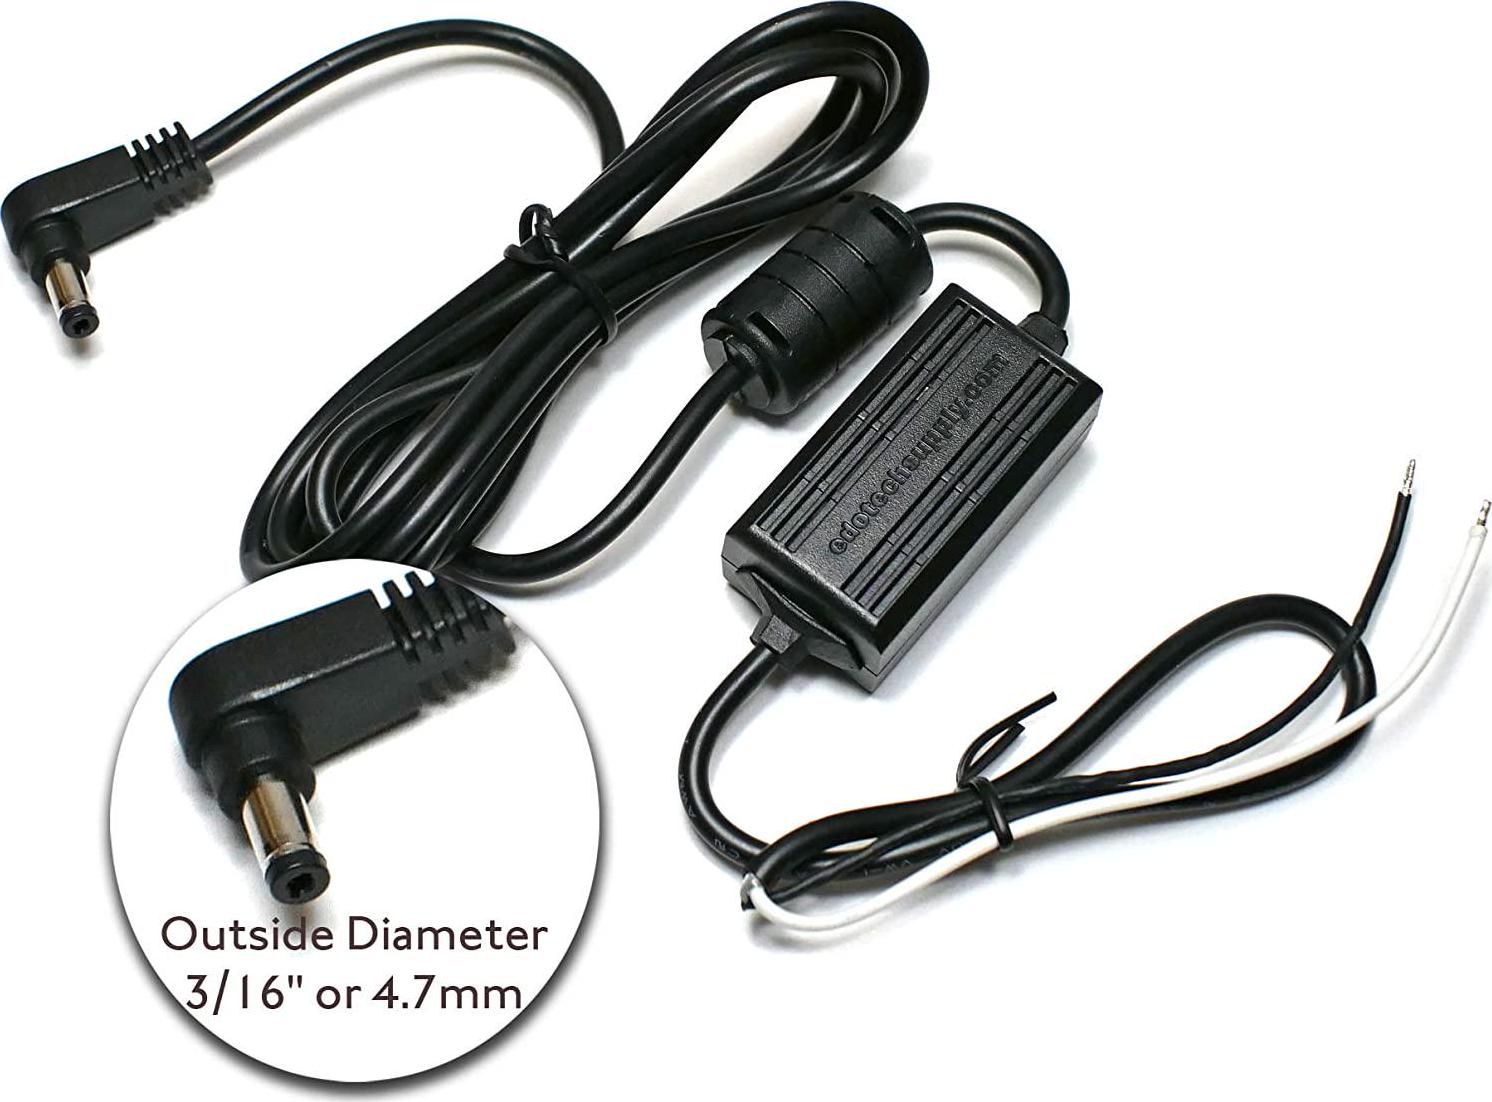 EDOTech, EDO TechÂ Direct Hardwire Vehicle 5V Power Cord Adapter Kit for Sirius XM Radio PowerConnect Dock Onyx Edge Lynx Stratus Starmate